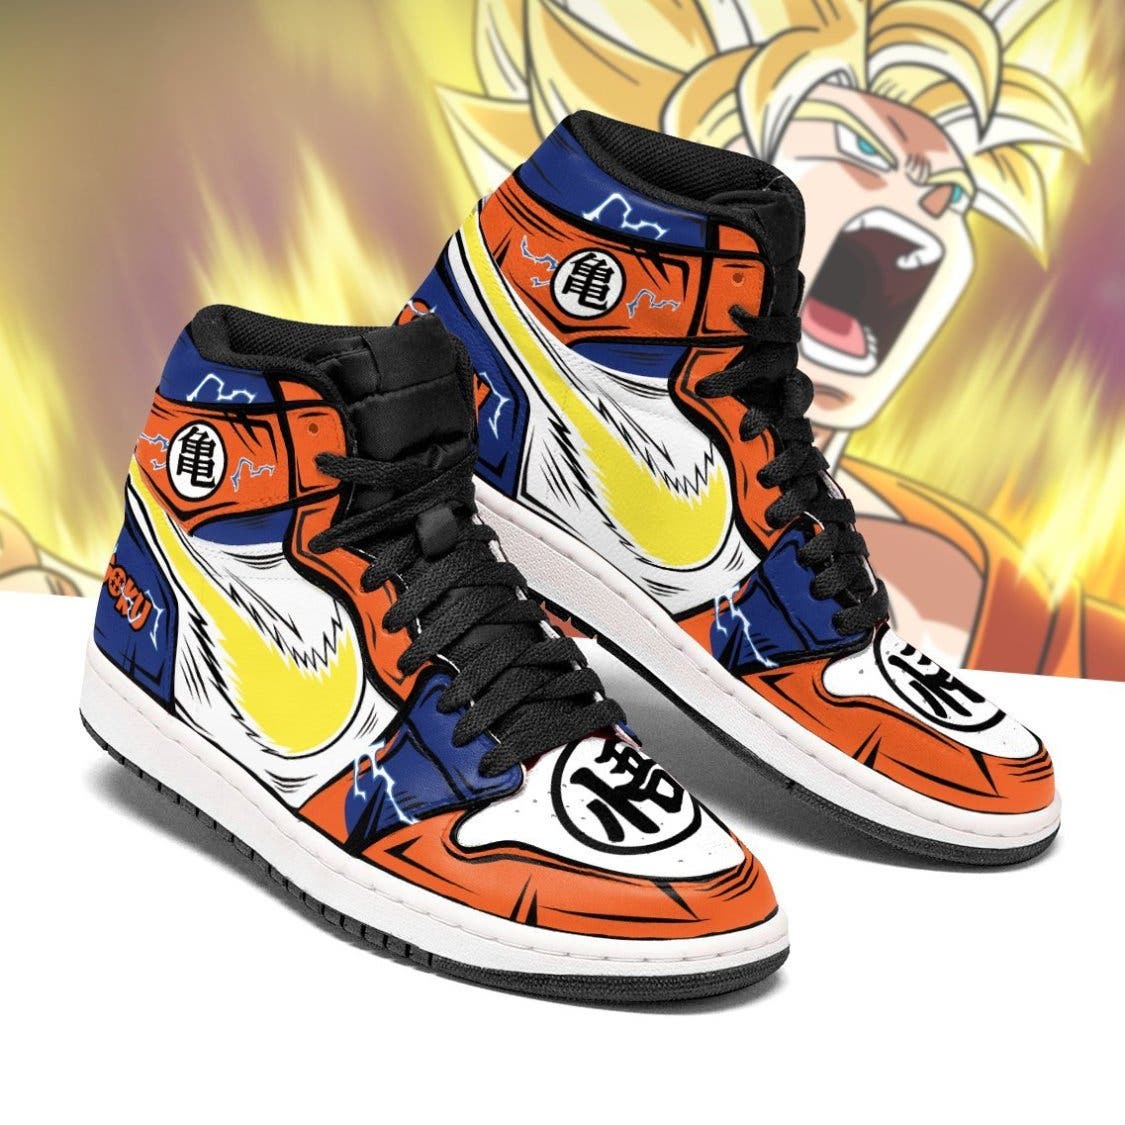 Así las zapatillas Dragon Ball Jordan que querrás comprar